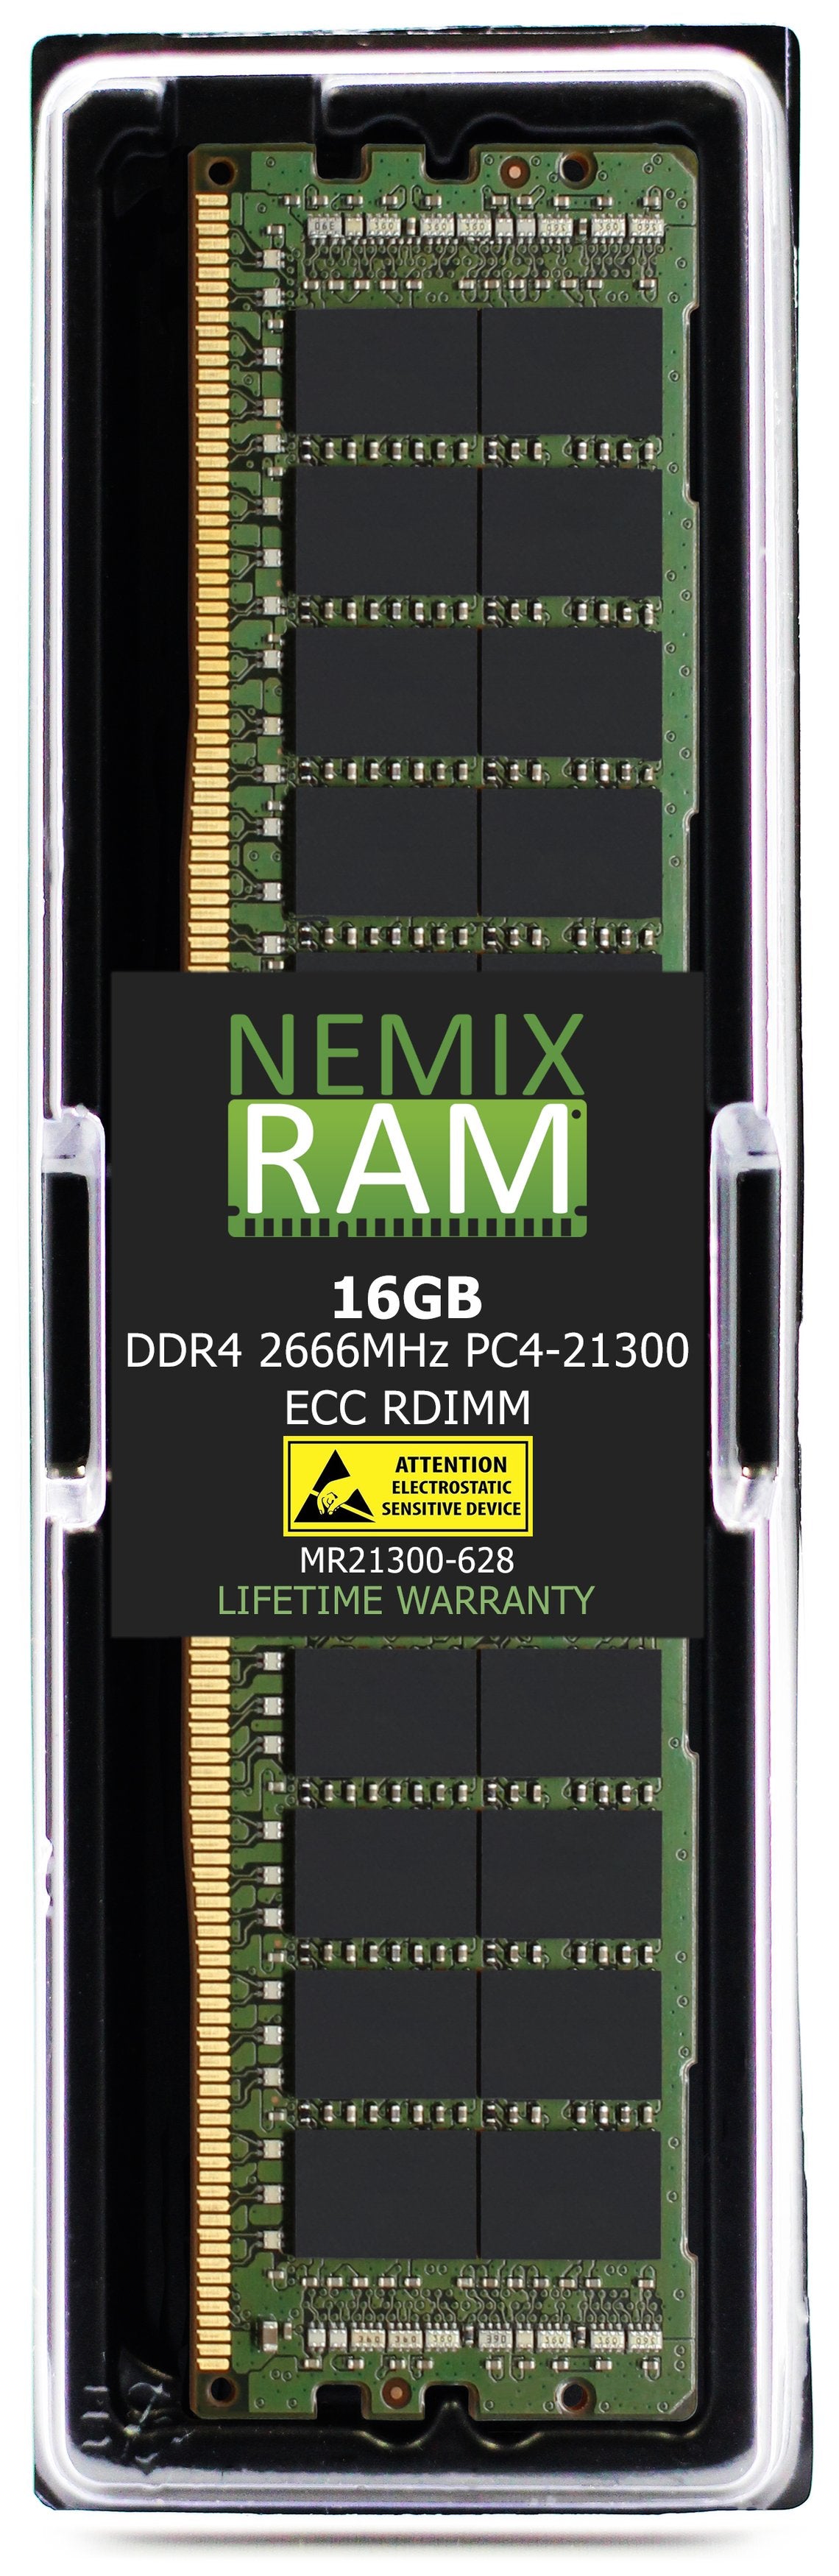 NEC Express5800 R120h Memory Module N8102-710 16GB DDR4 2666MHZ PC4-21300 RDIMM